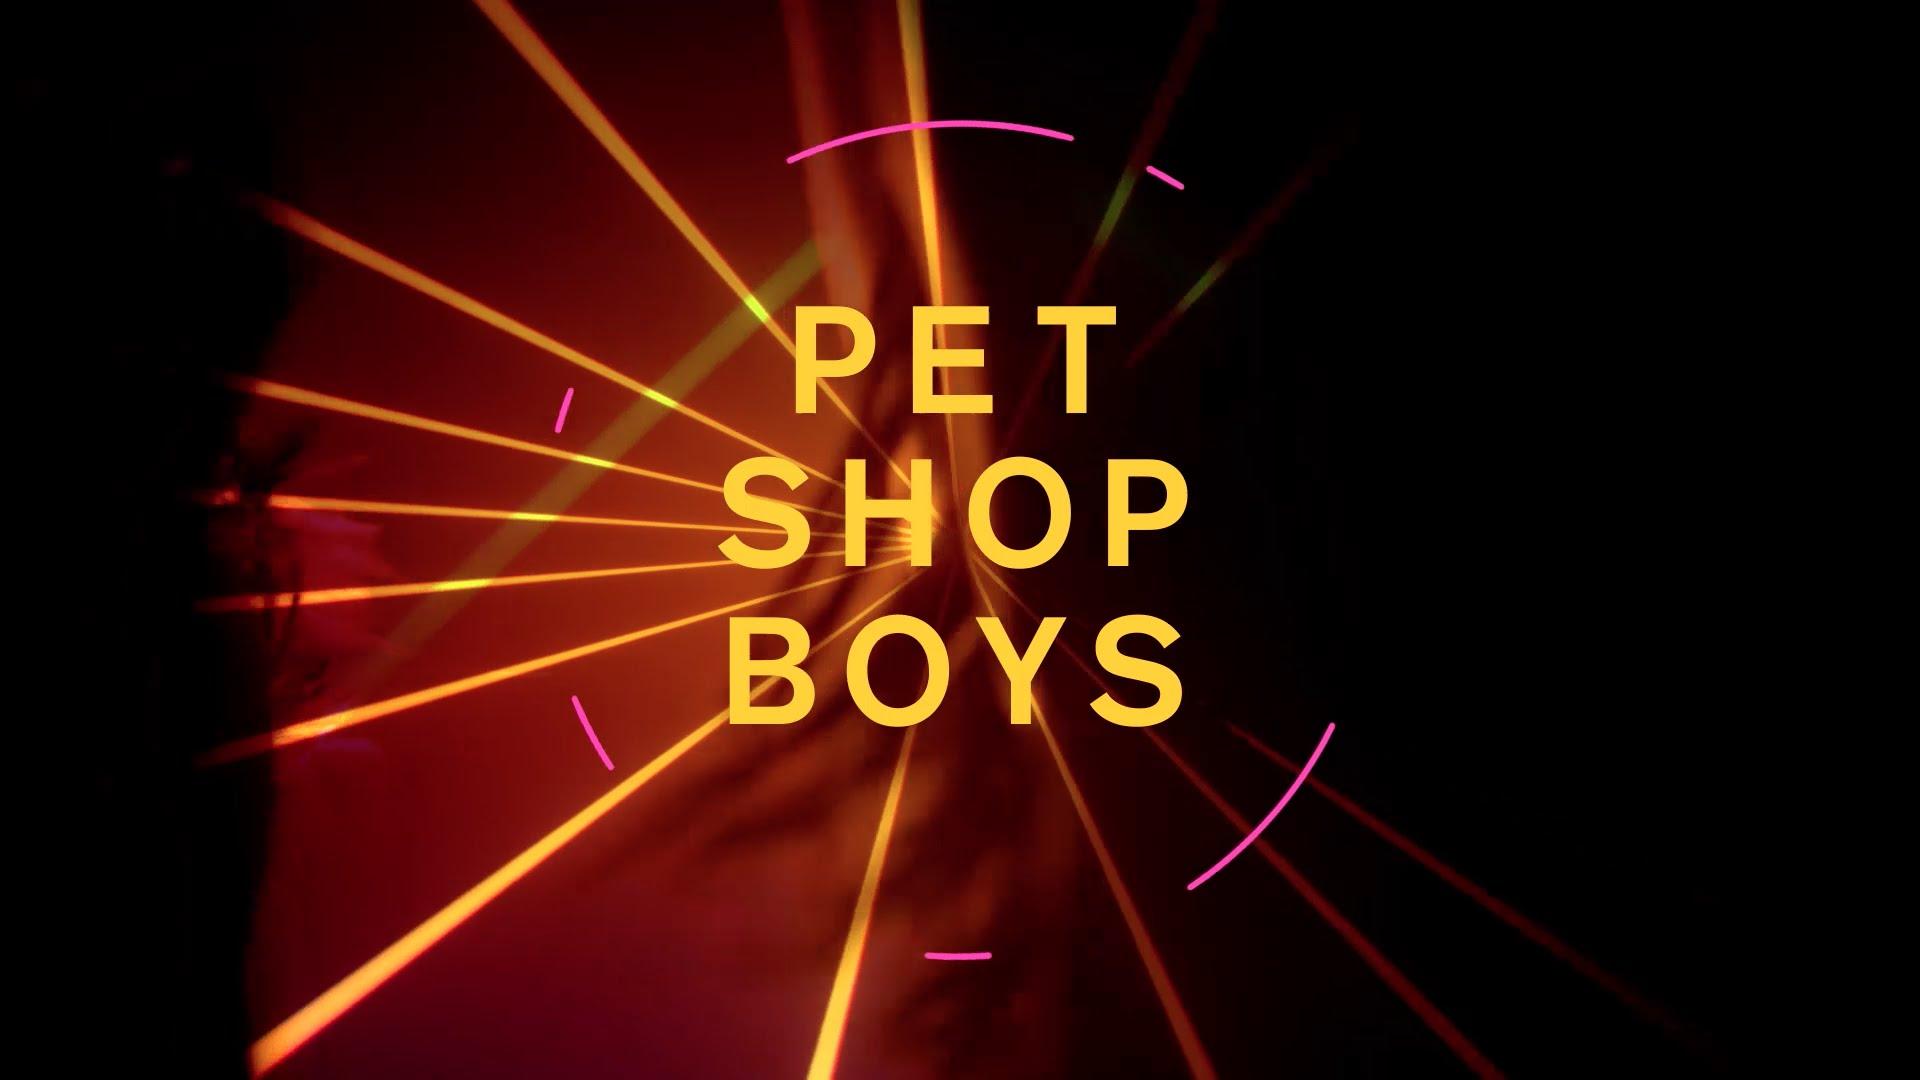 Pet shop boys were. Pet shop boys super 2016. Pet shop boys альбомы. Pet shop boys обложки альбомов. Pet shop boys альбом super.